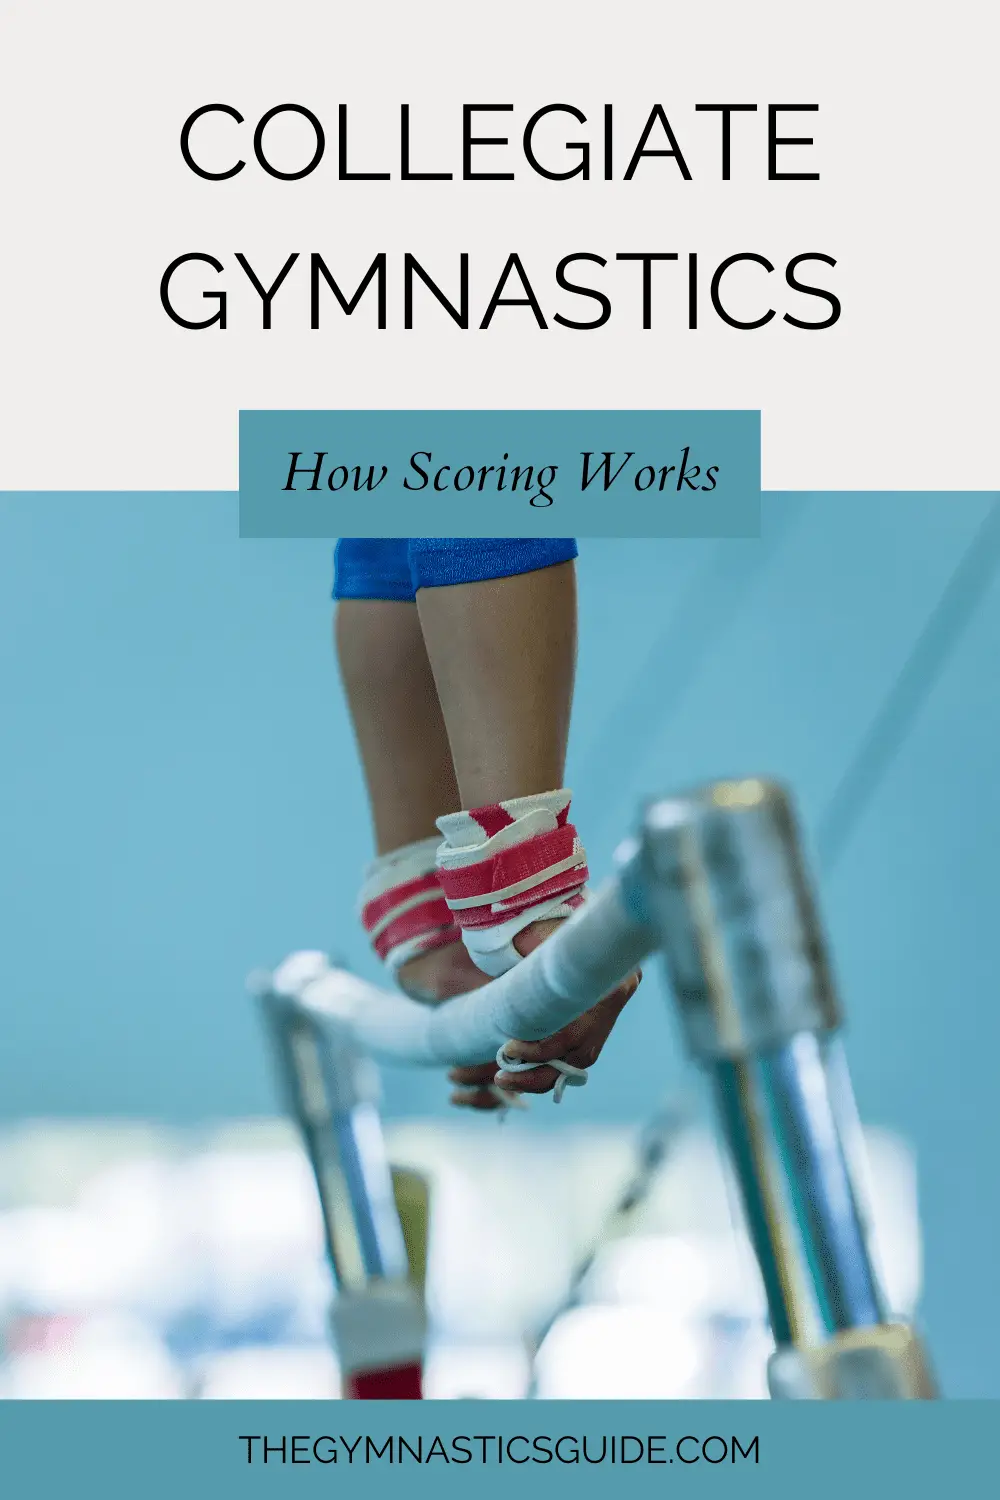 How Does Scoring Work in College Gymnastics?